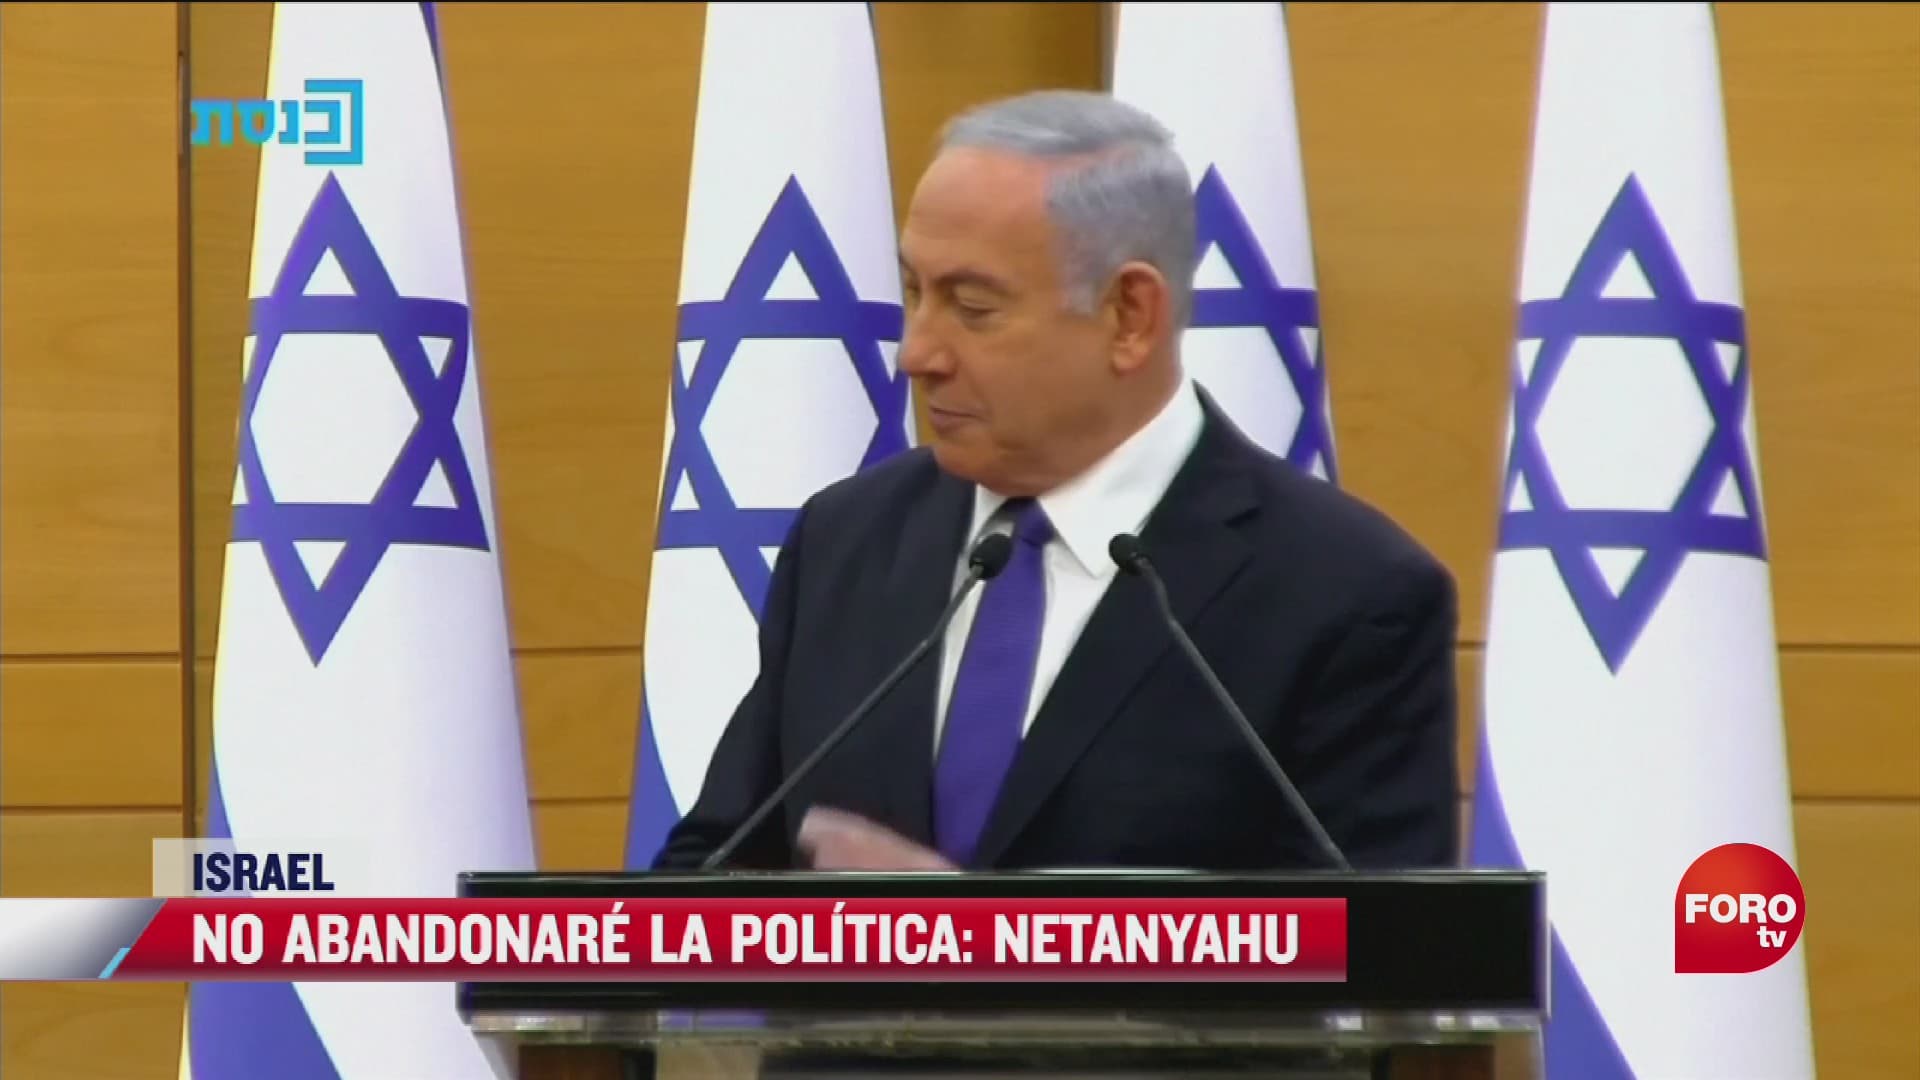 benjamin netanyahu deja el poder en israel tras 12 anos